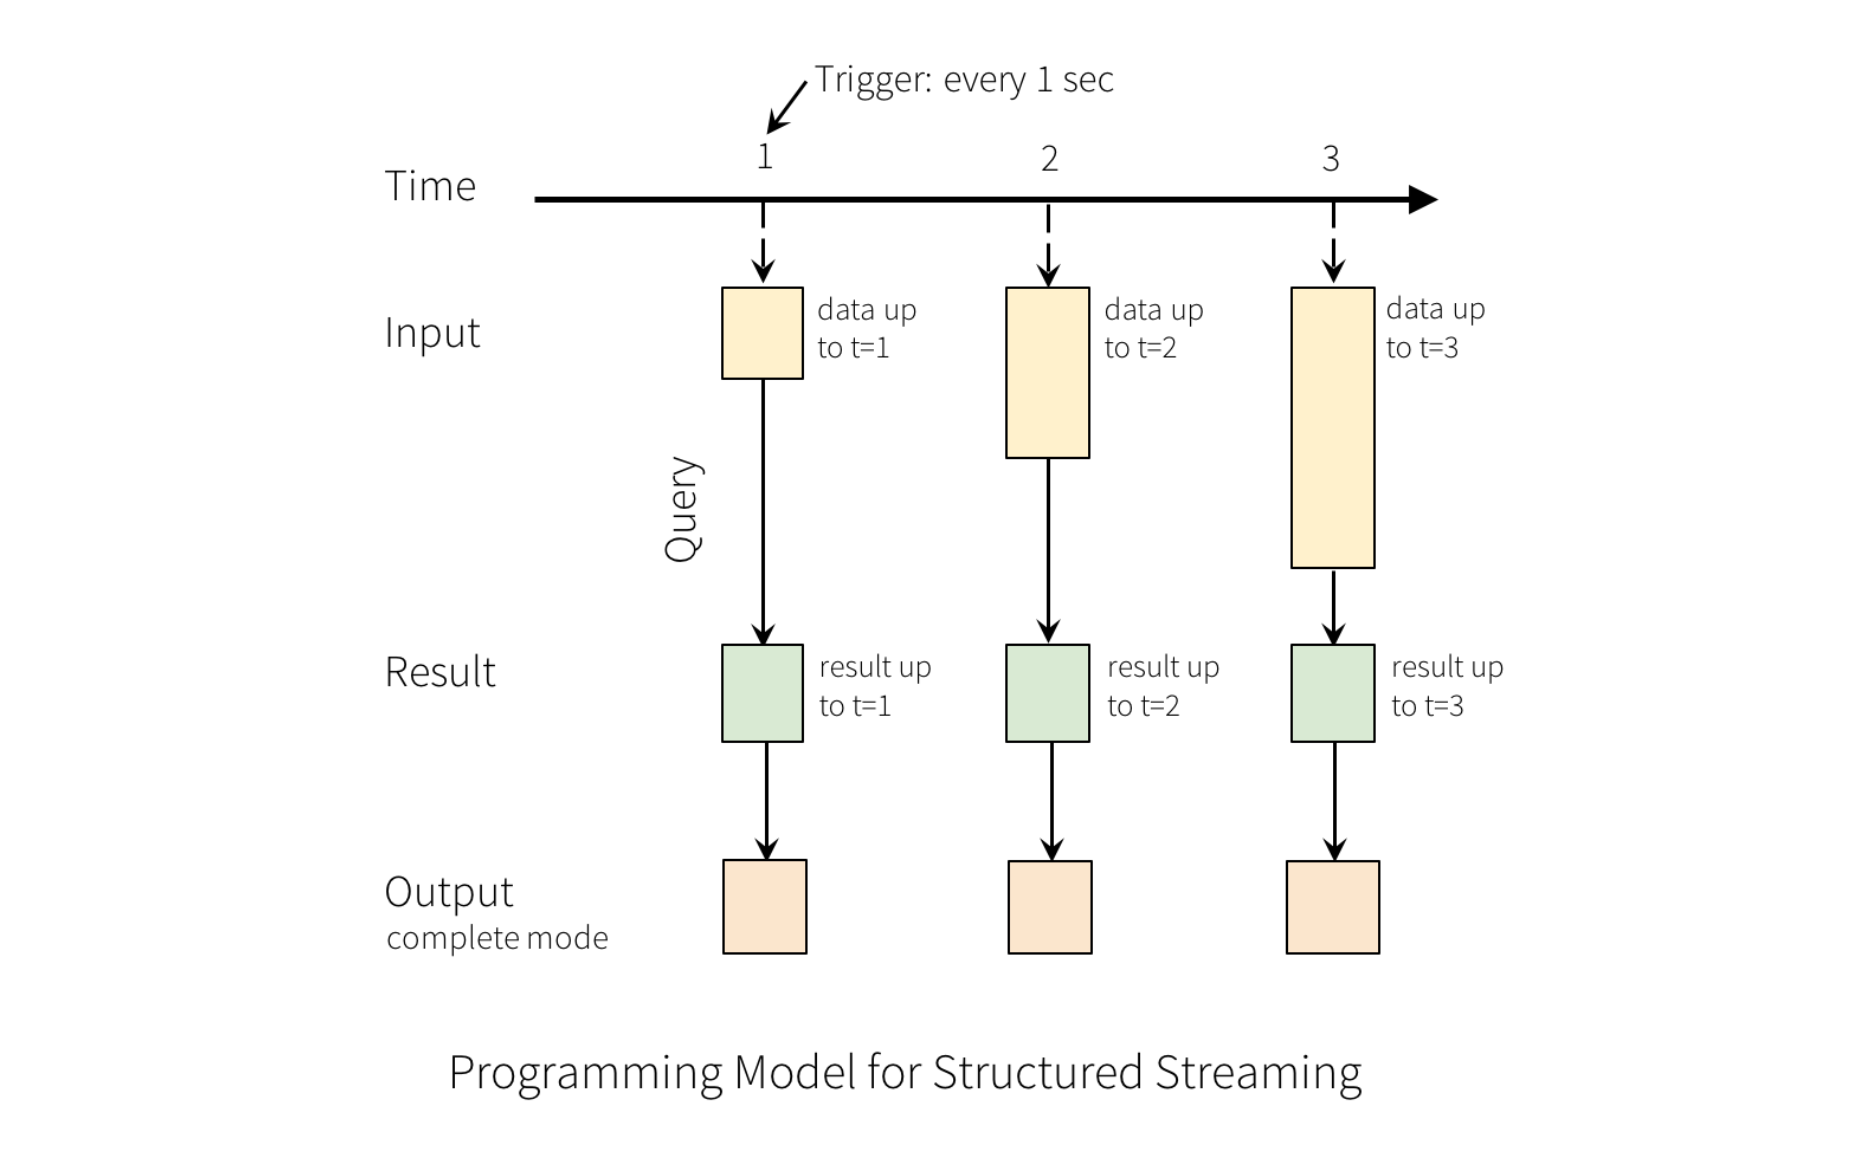 Programming streams